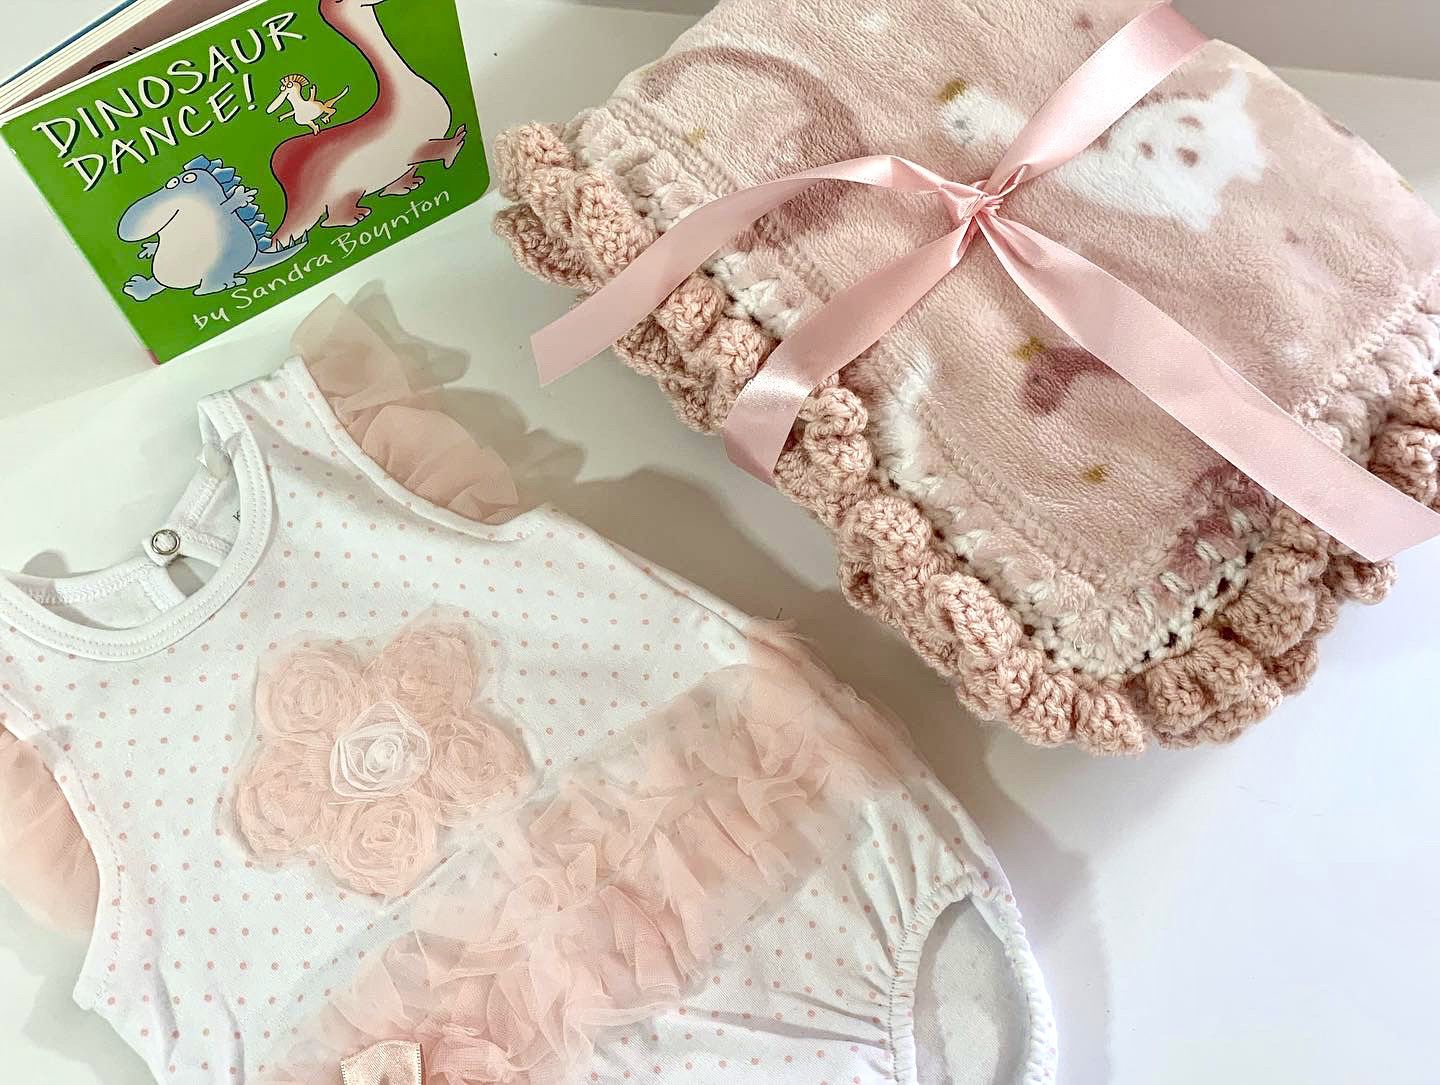 Dinosaur Princess with Ruffles Crochet Baby Blanket Gift Set